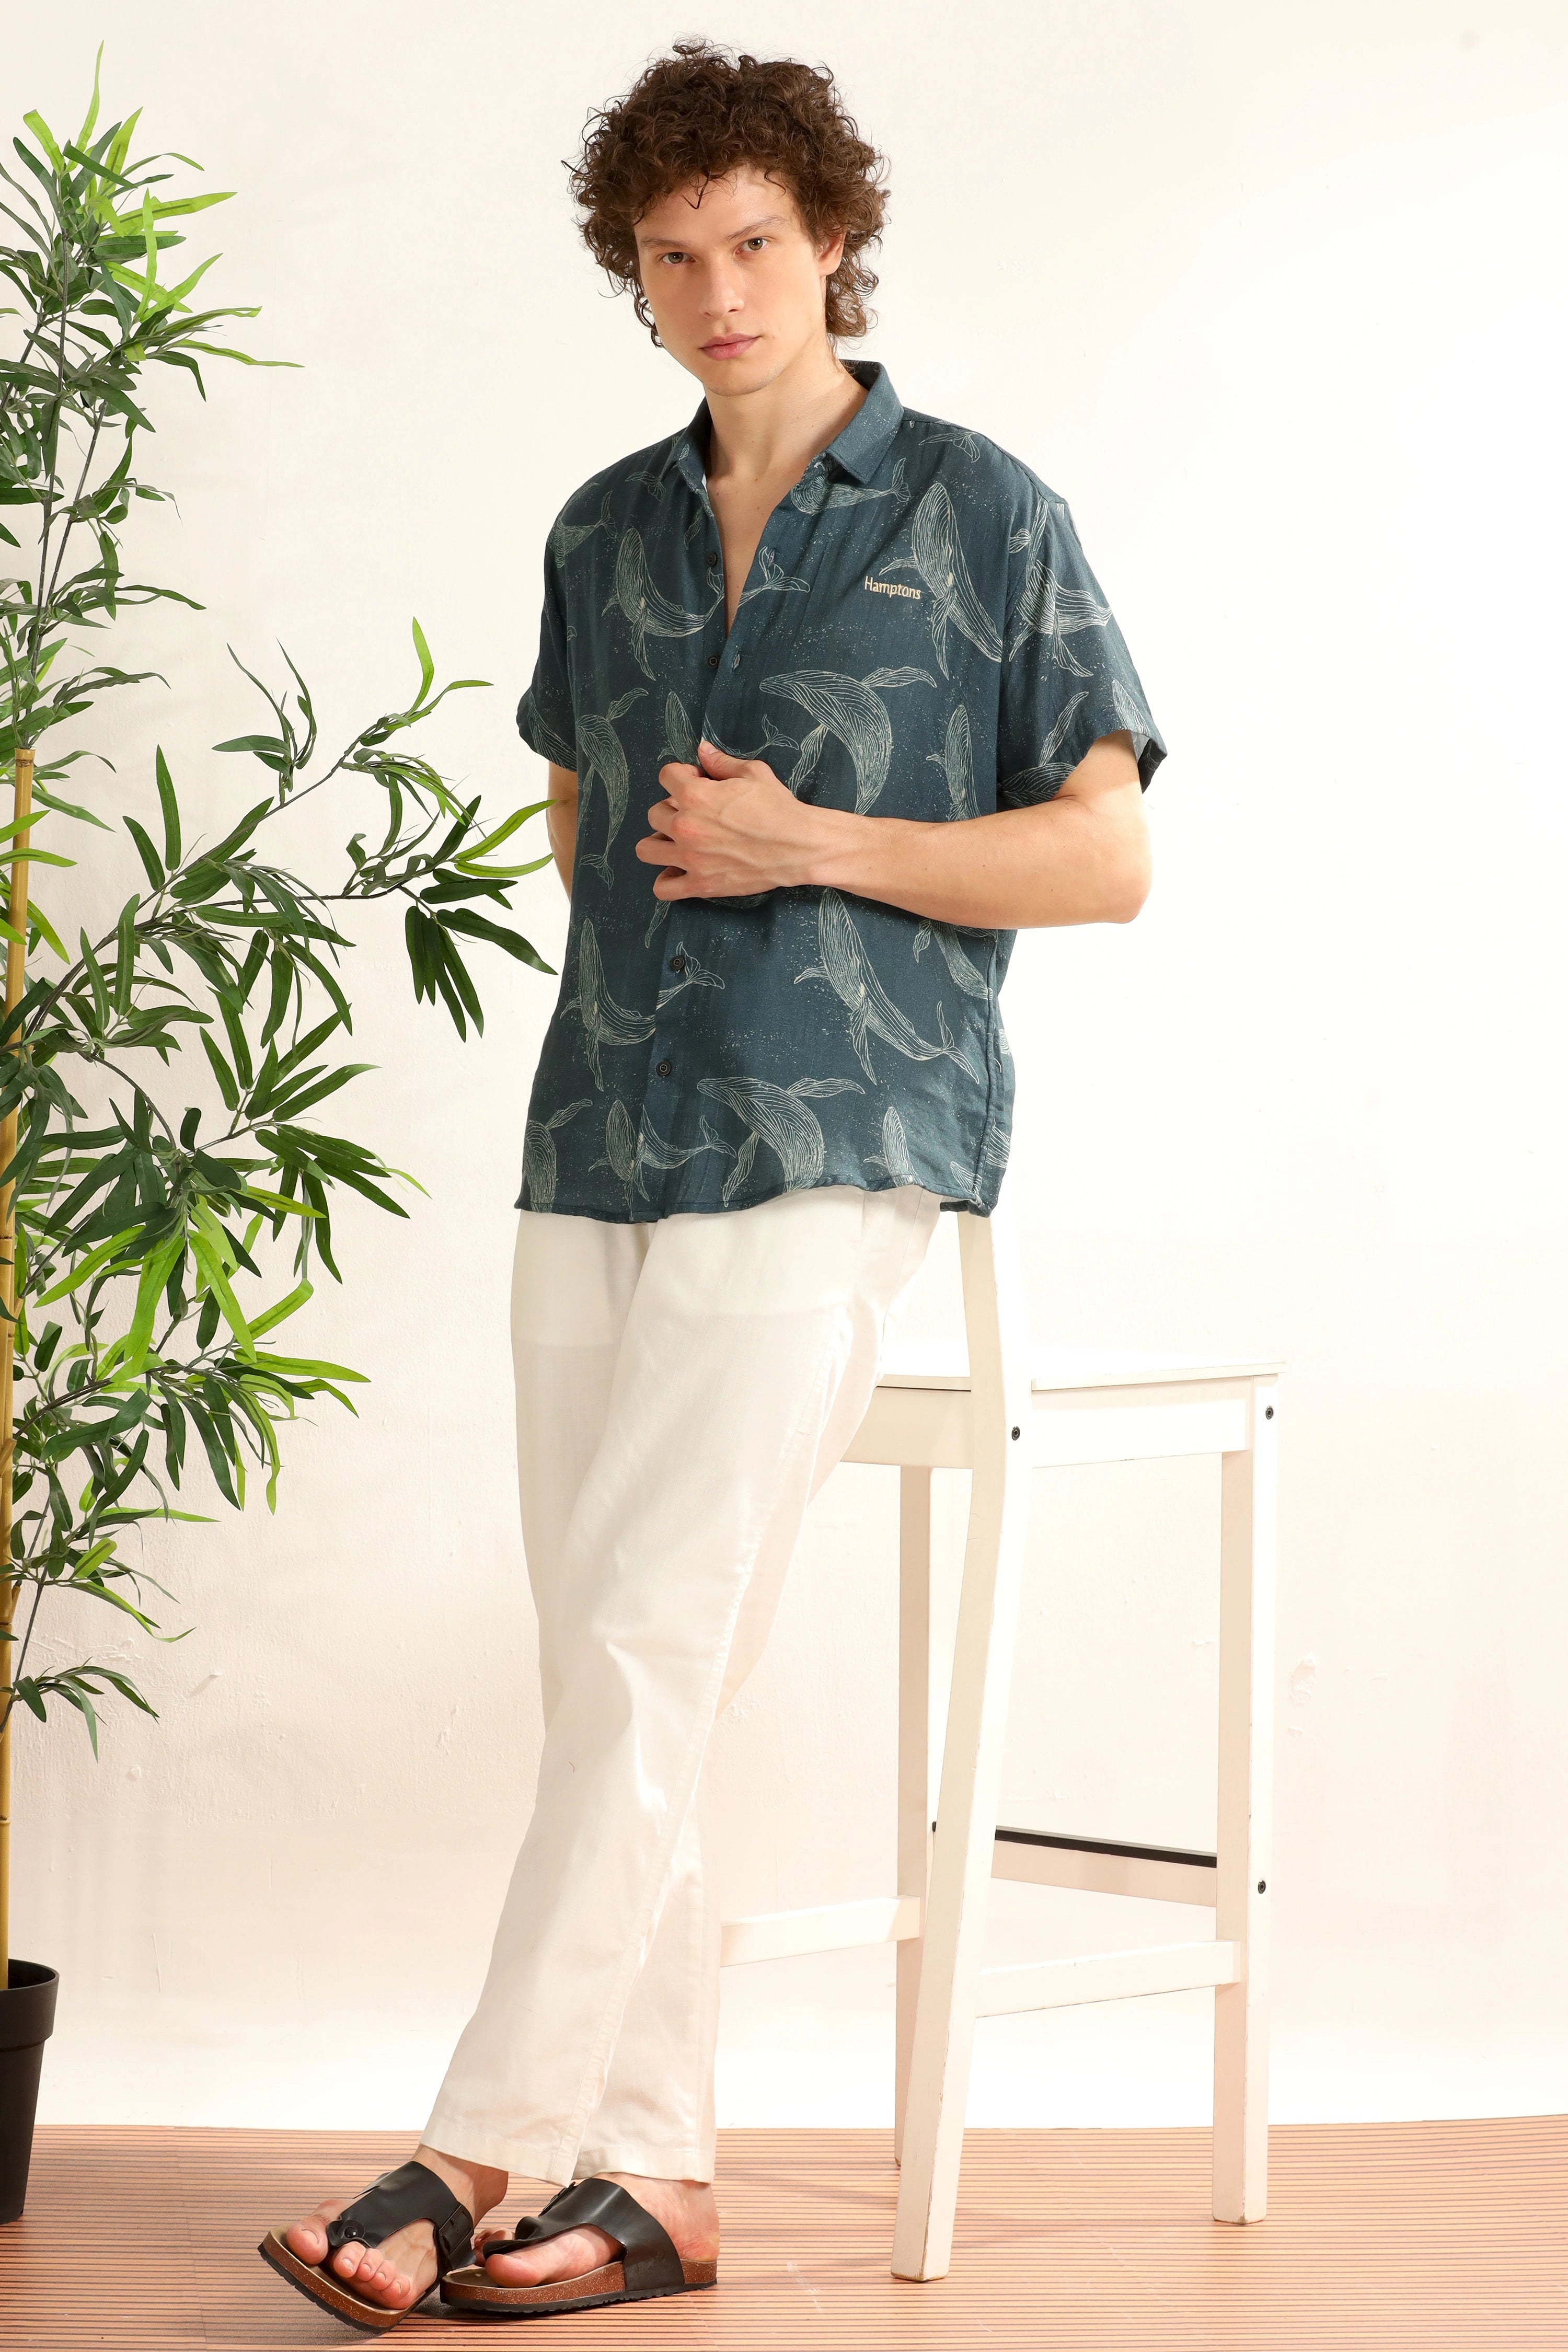 Founder's Fav whale 100% cotton shirt